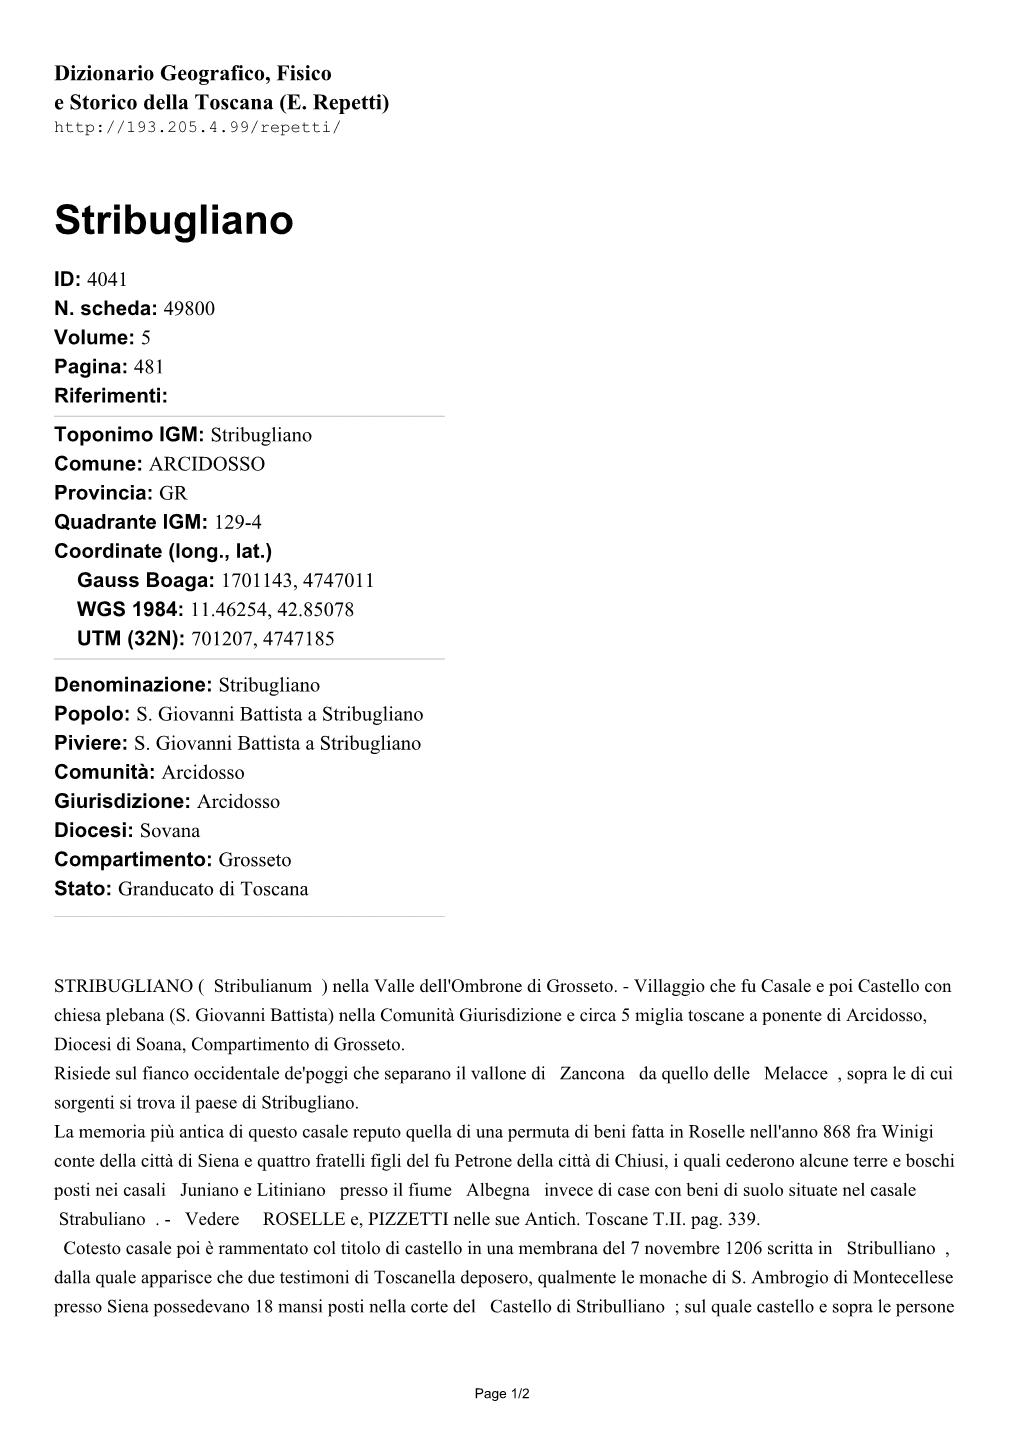 Stribugliano